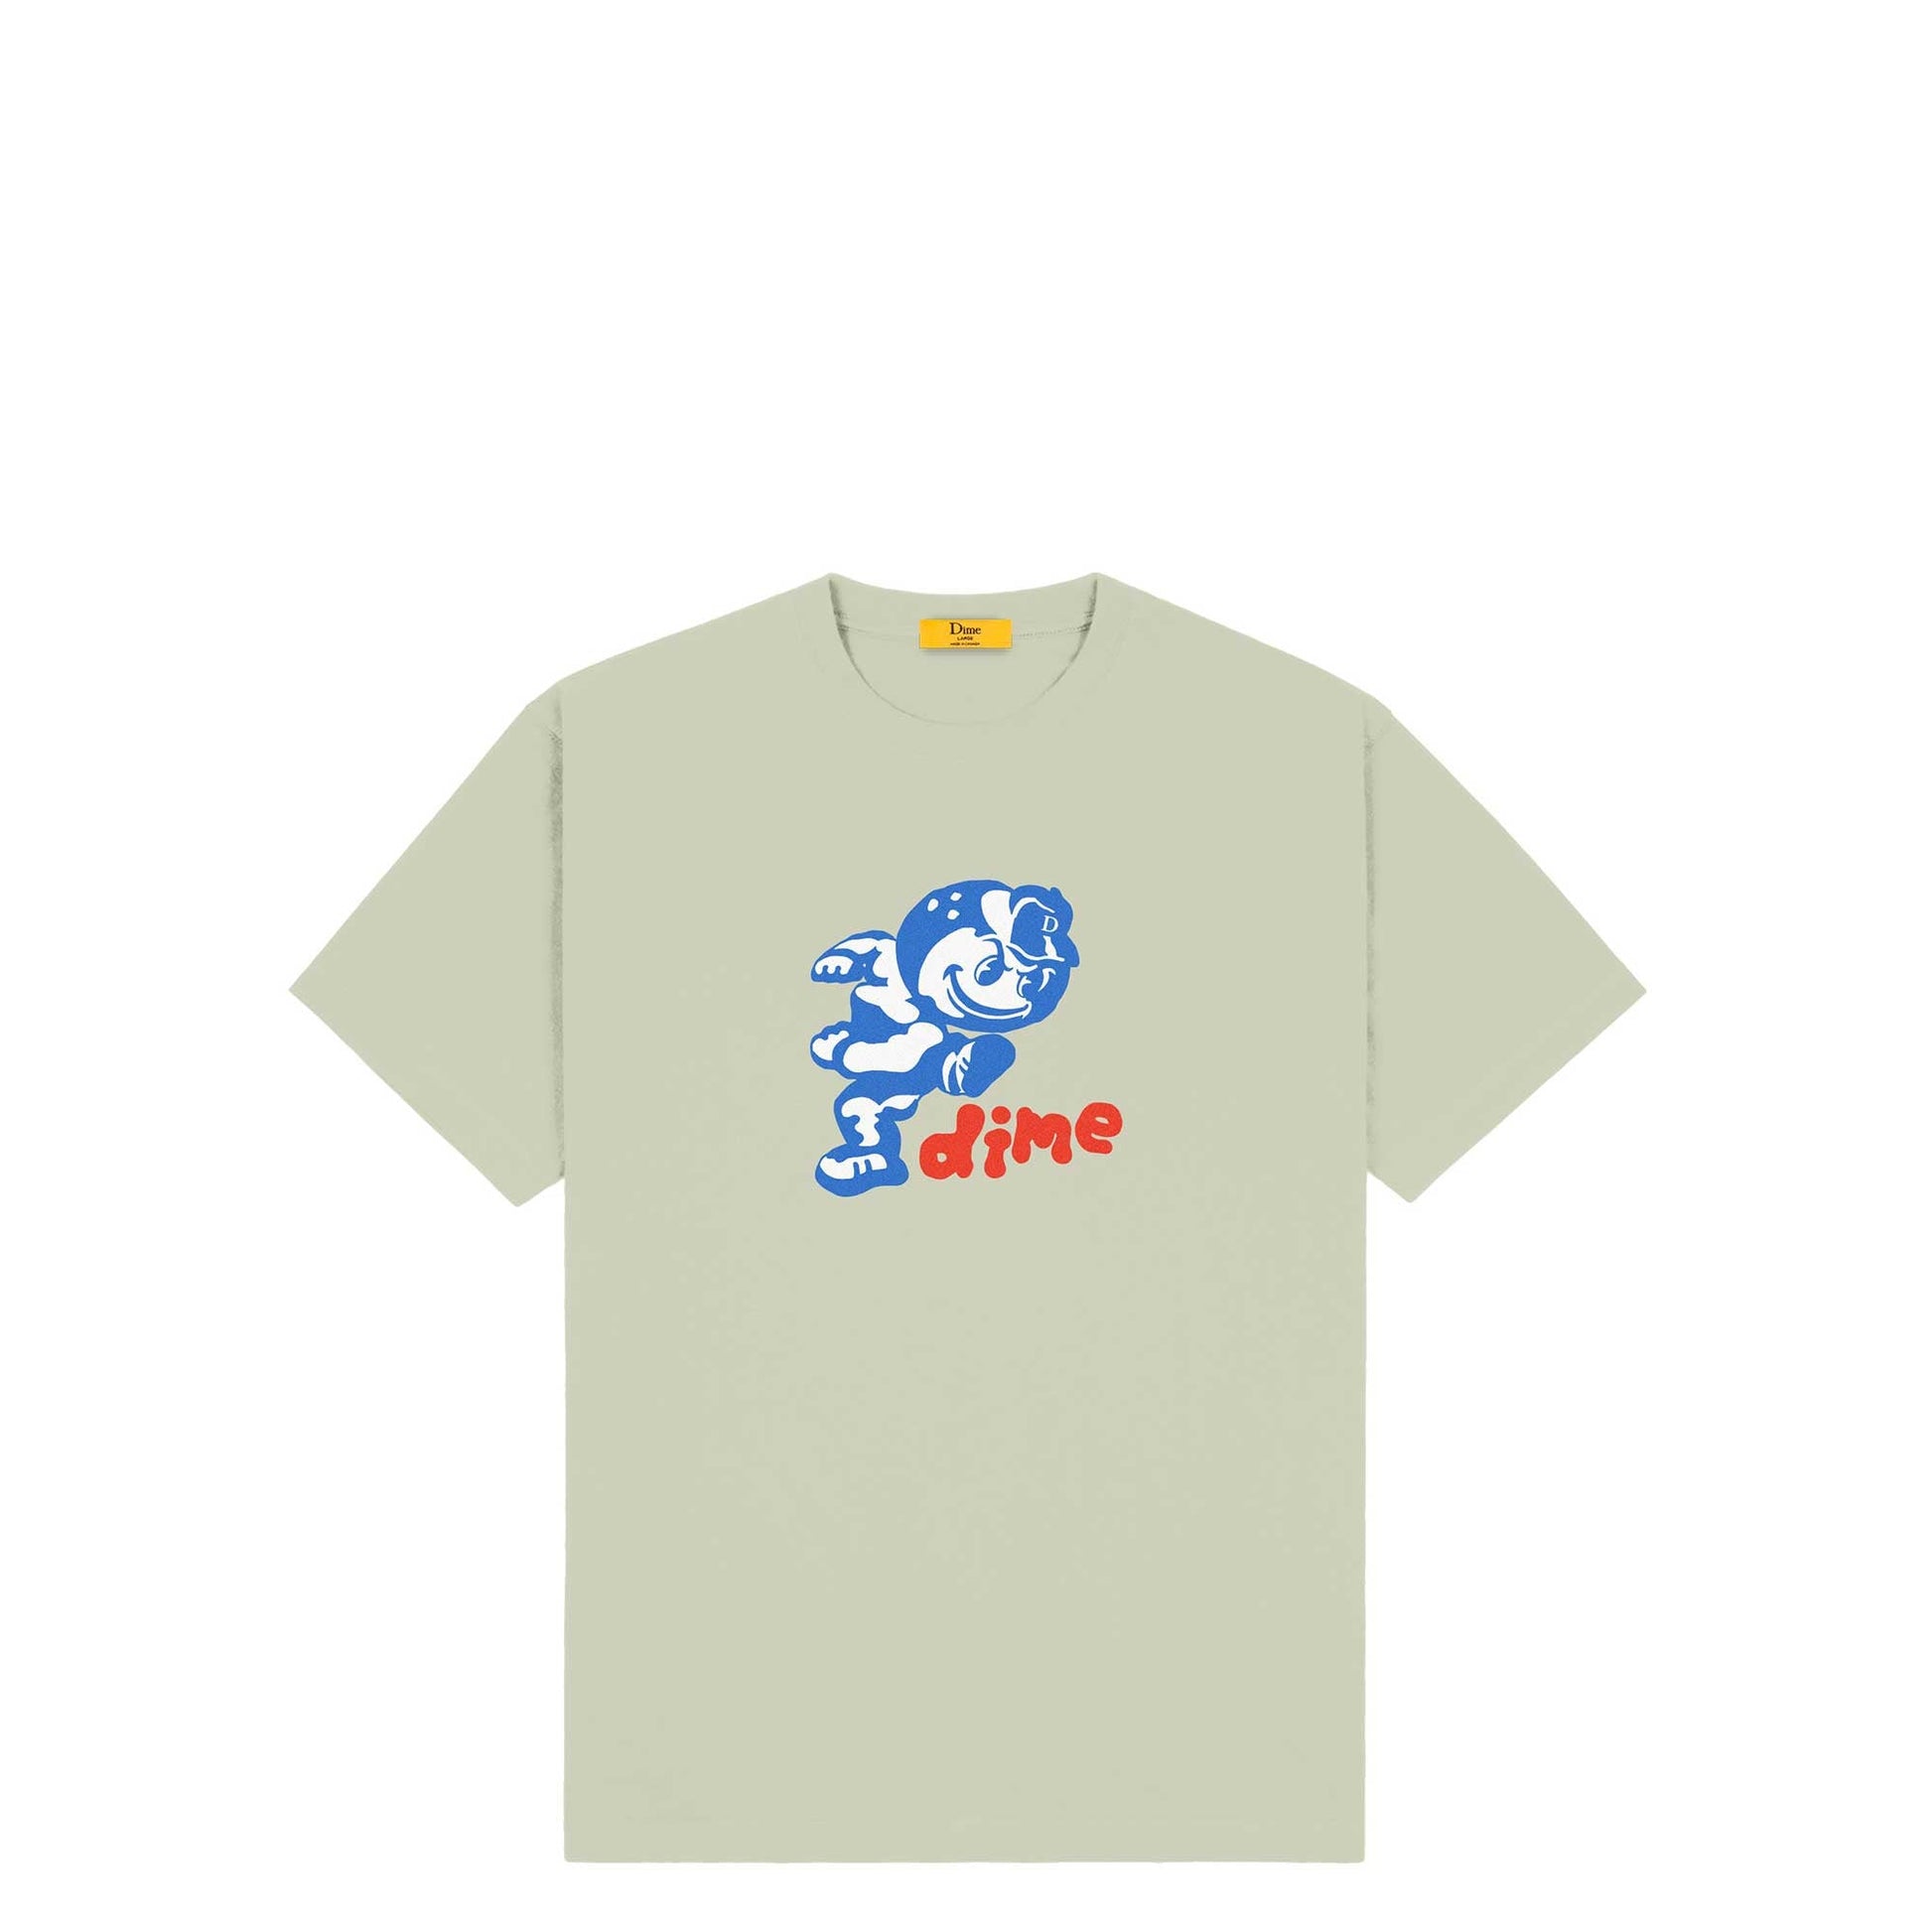 Dime Ballboy T-Shirt, clay - Tiki Room Skateboards - 1